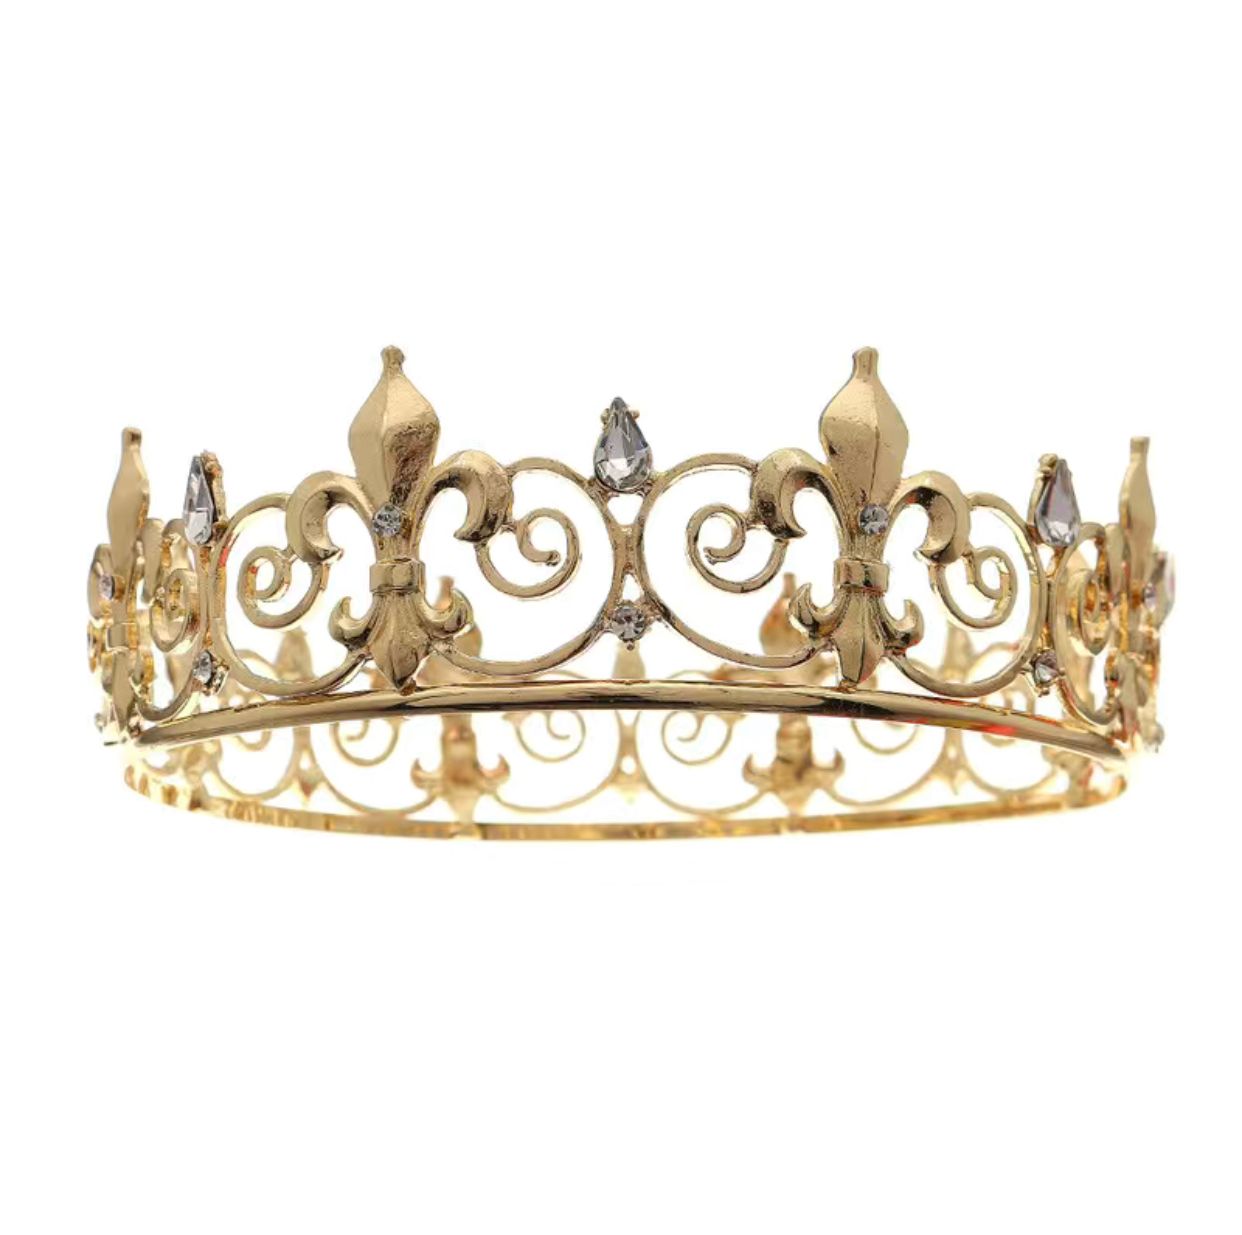 Baroque Full Circle Rhinestones Embellished Golden Crown